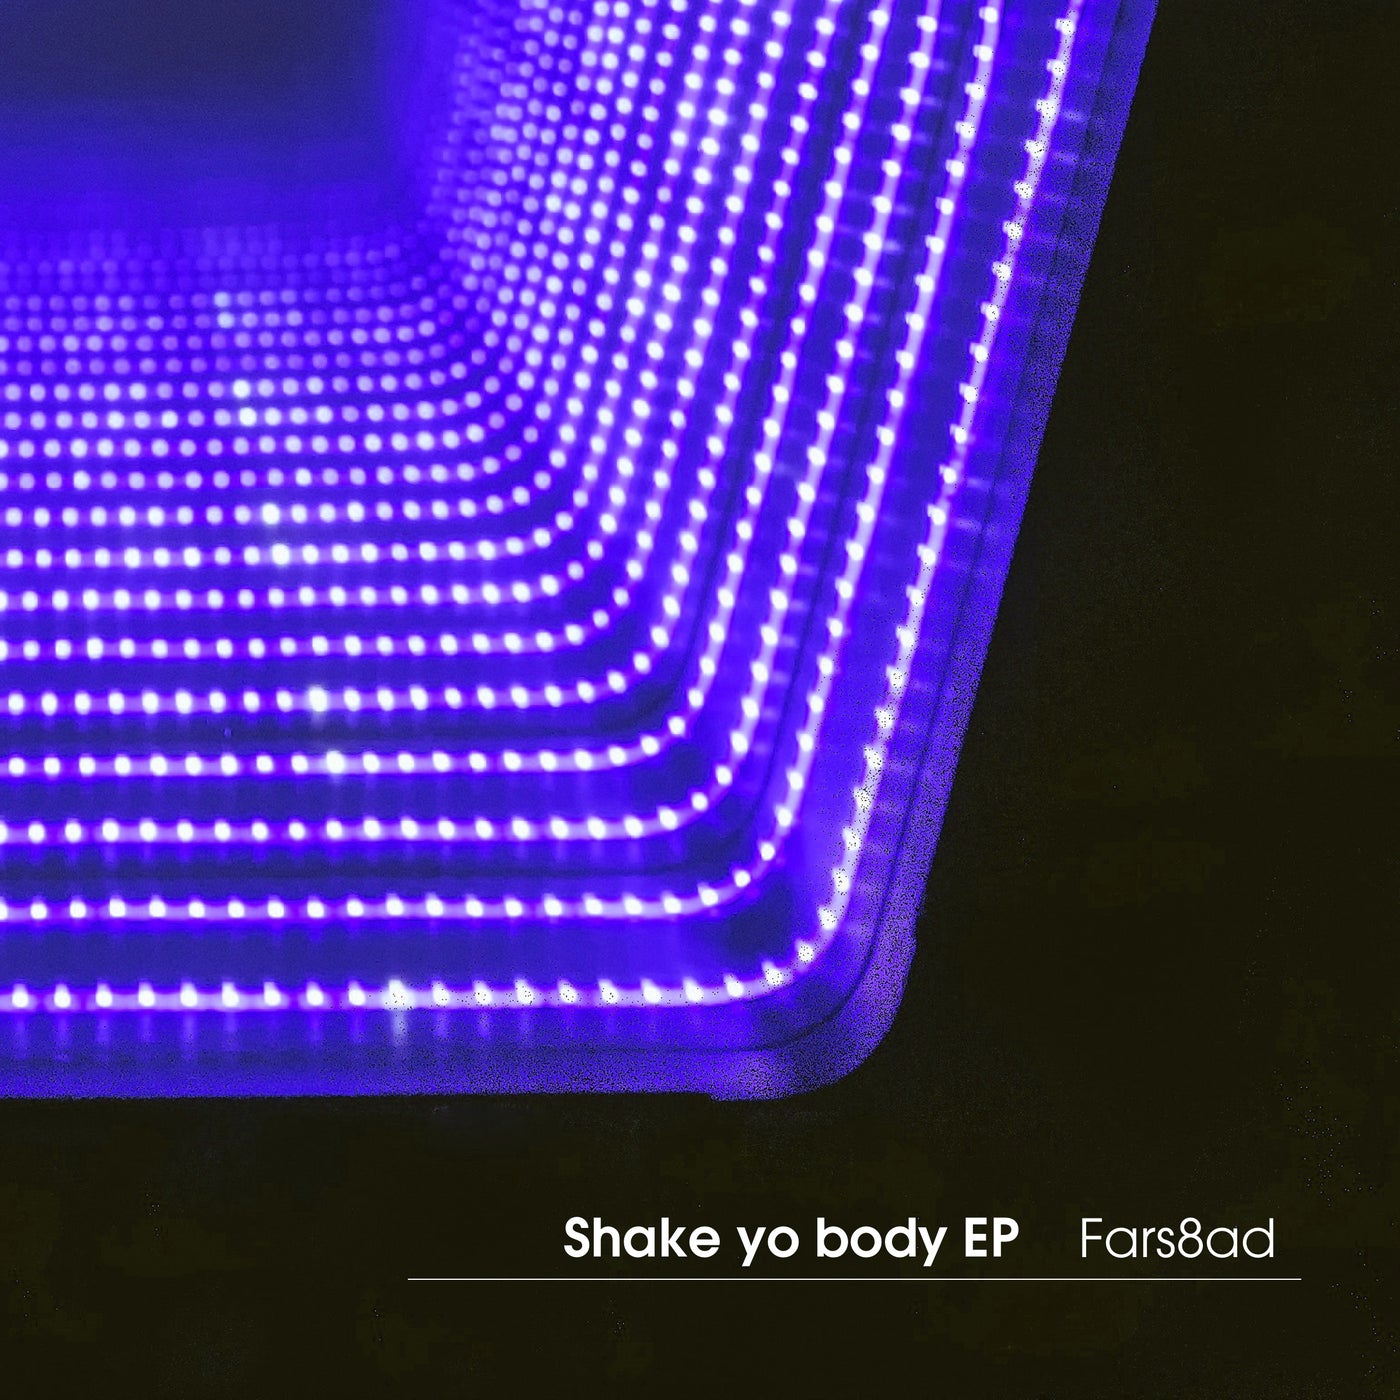 Fars8ad – Shake yo body EP [TRXX1191]